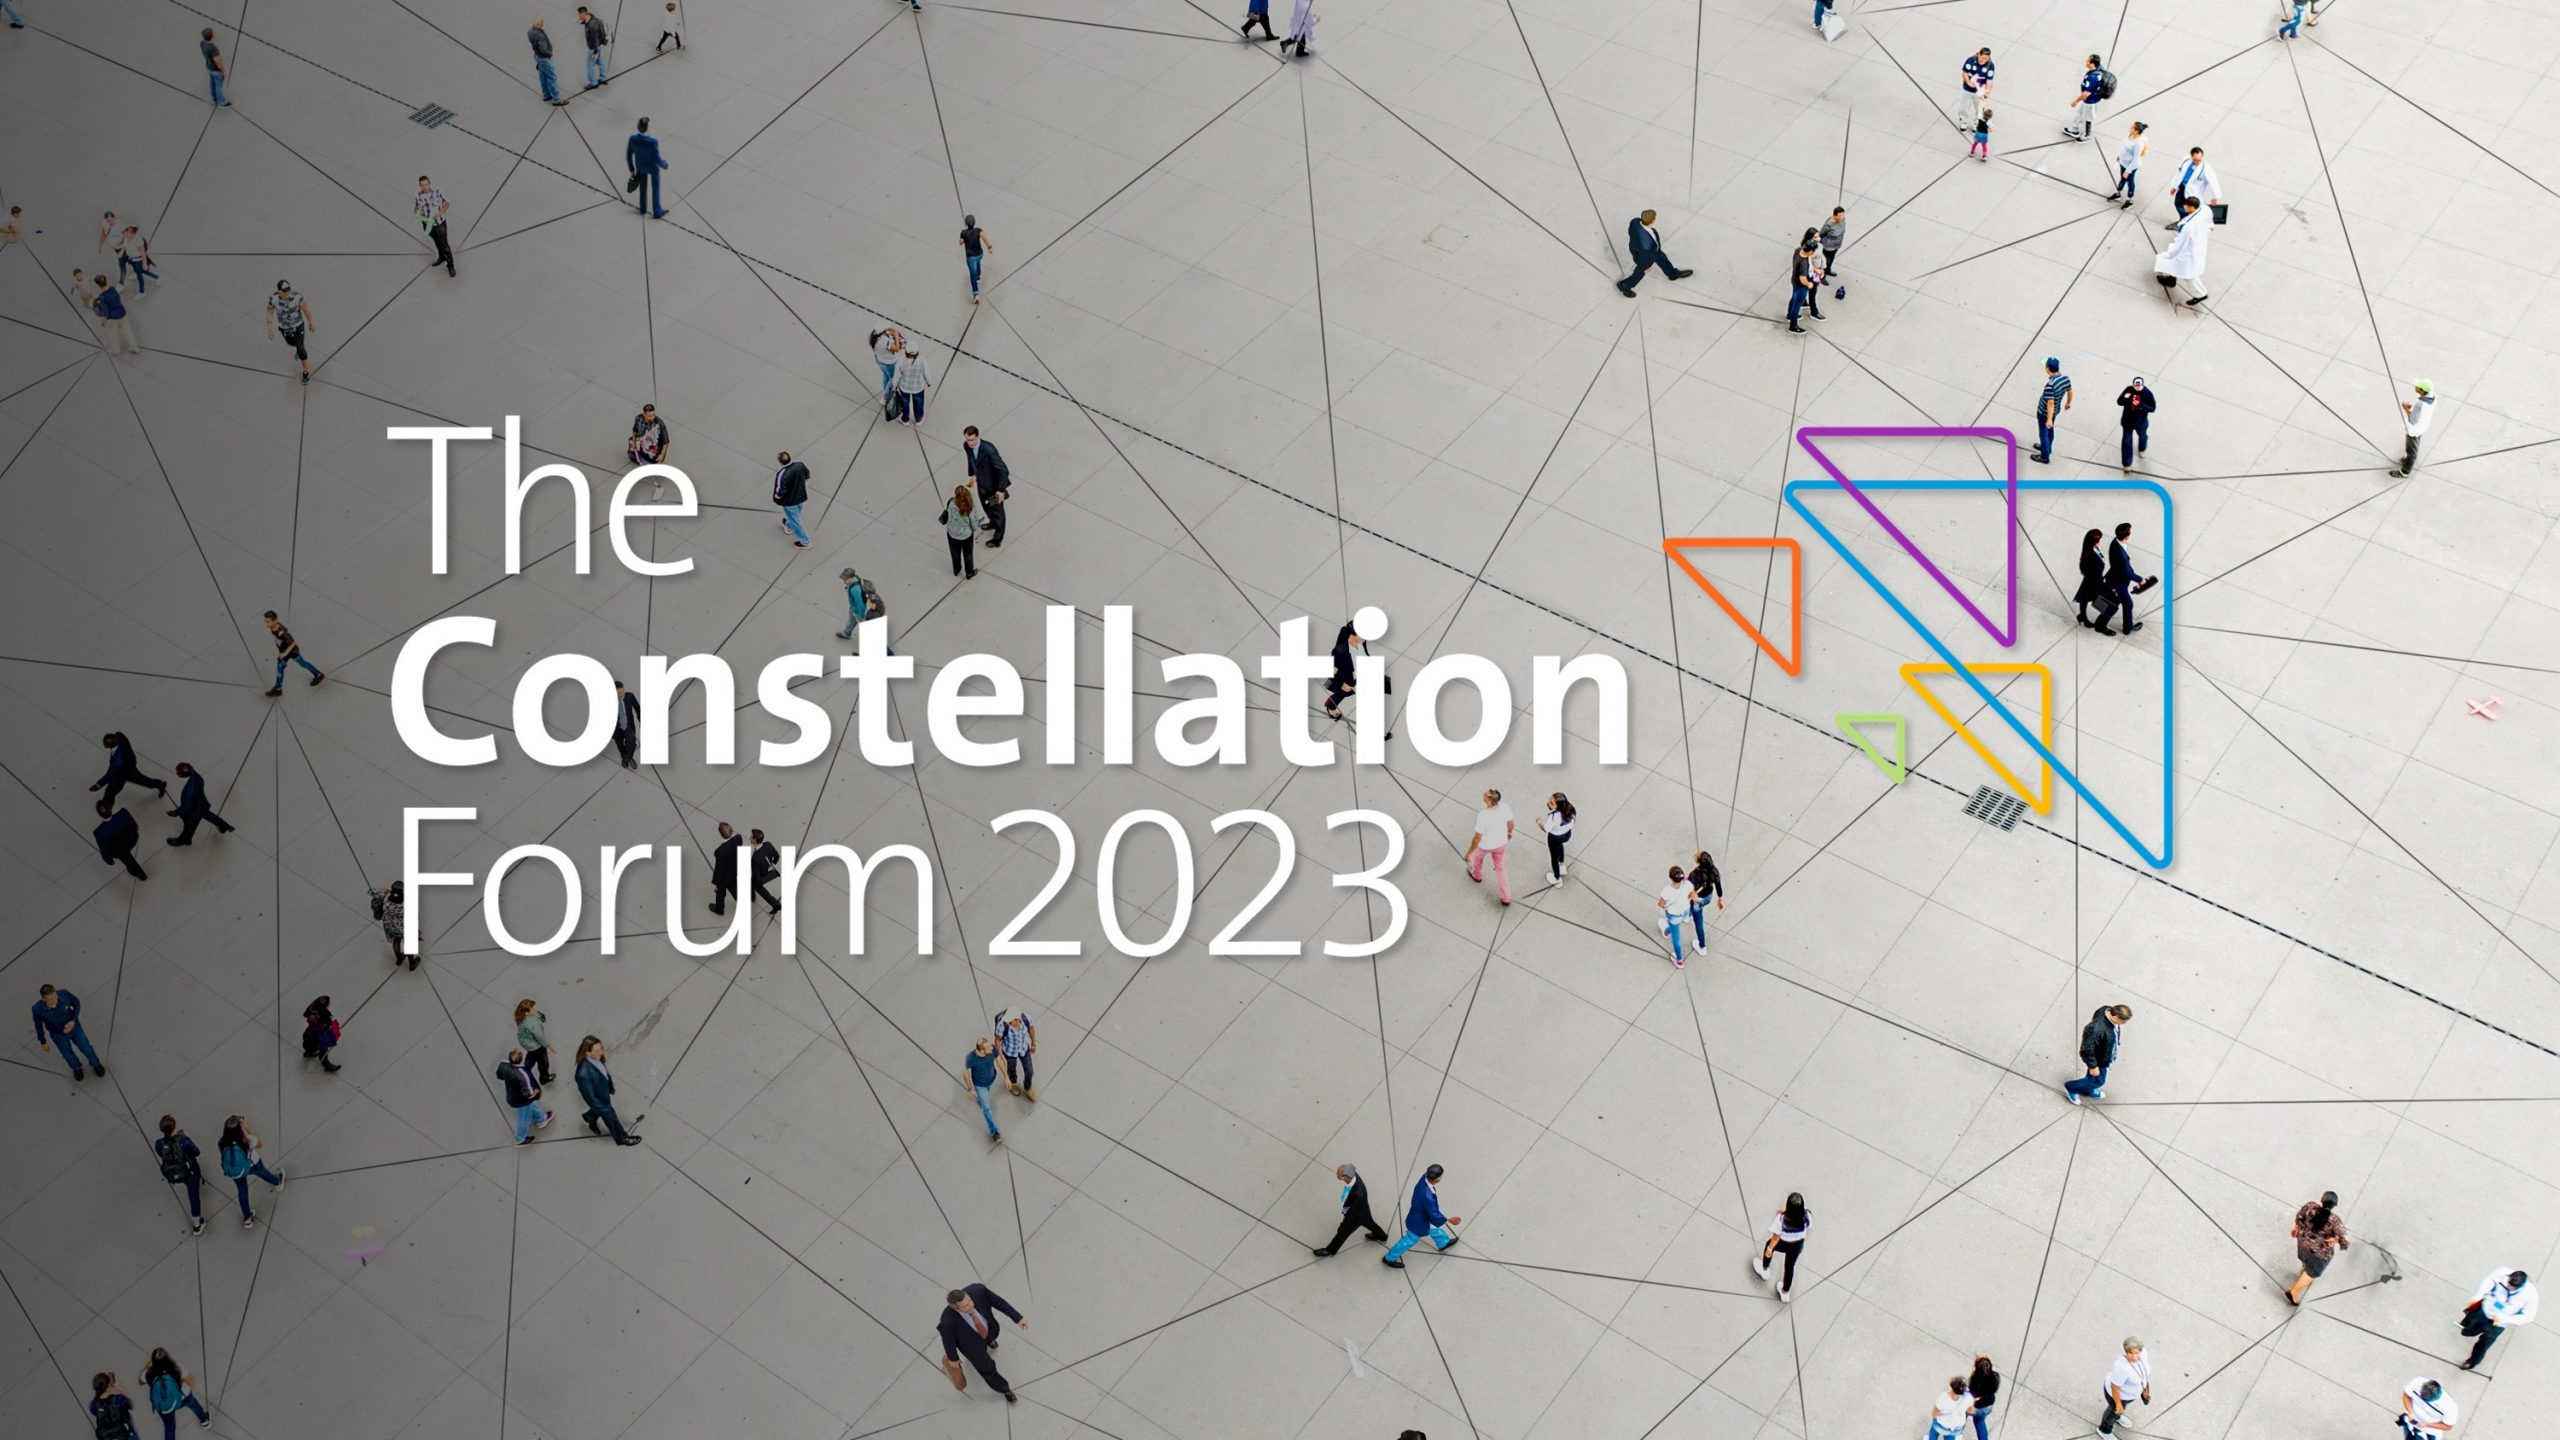 The Constellation Forum